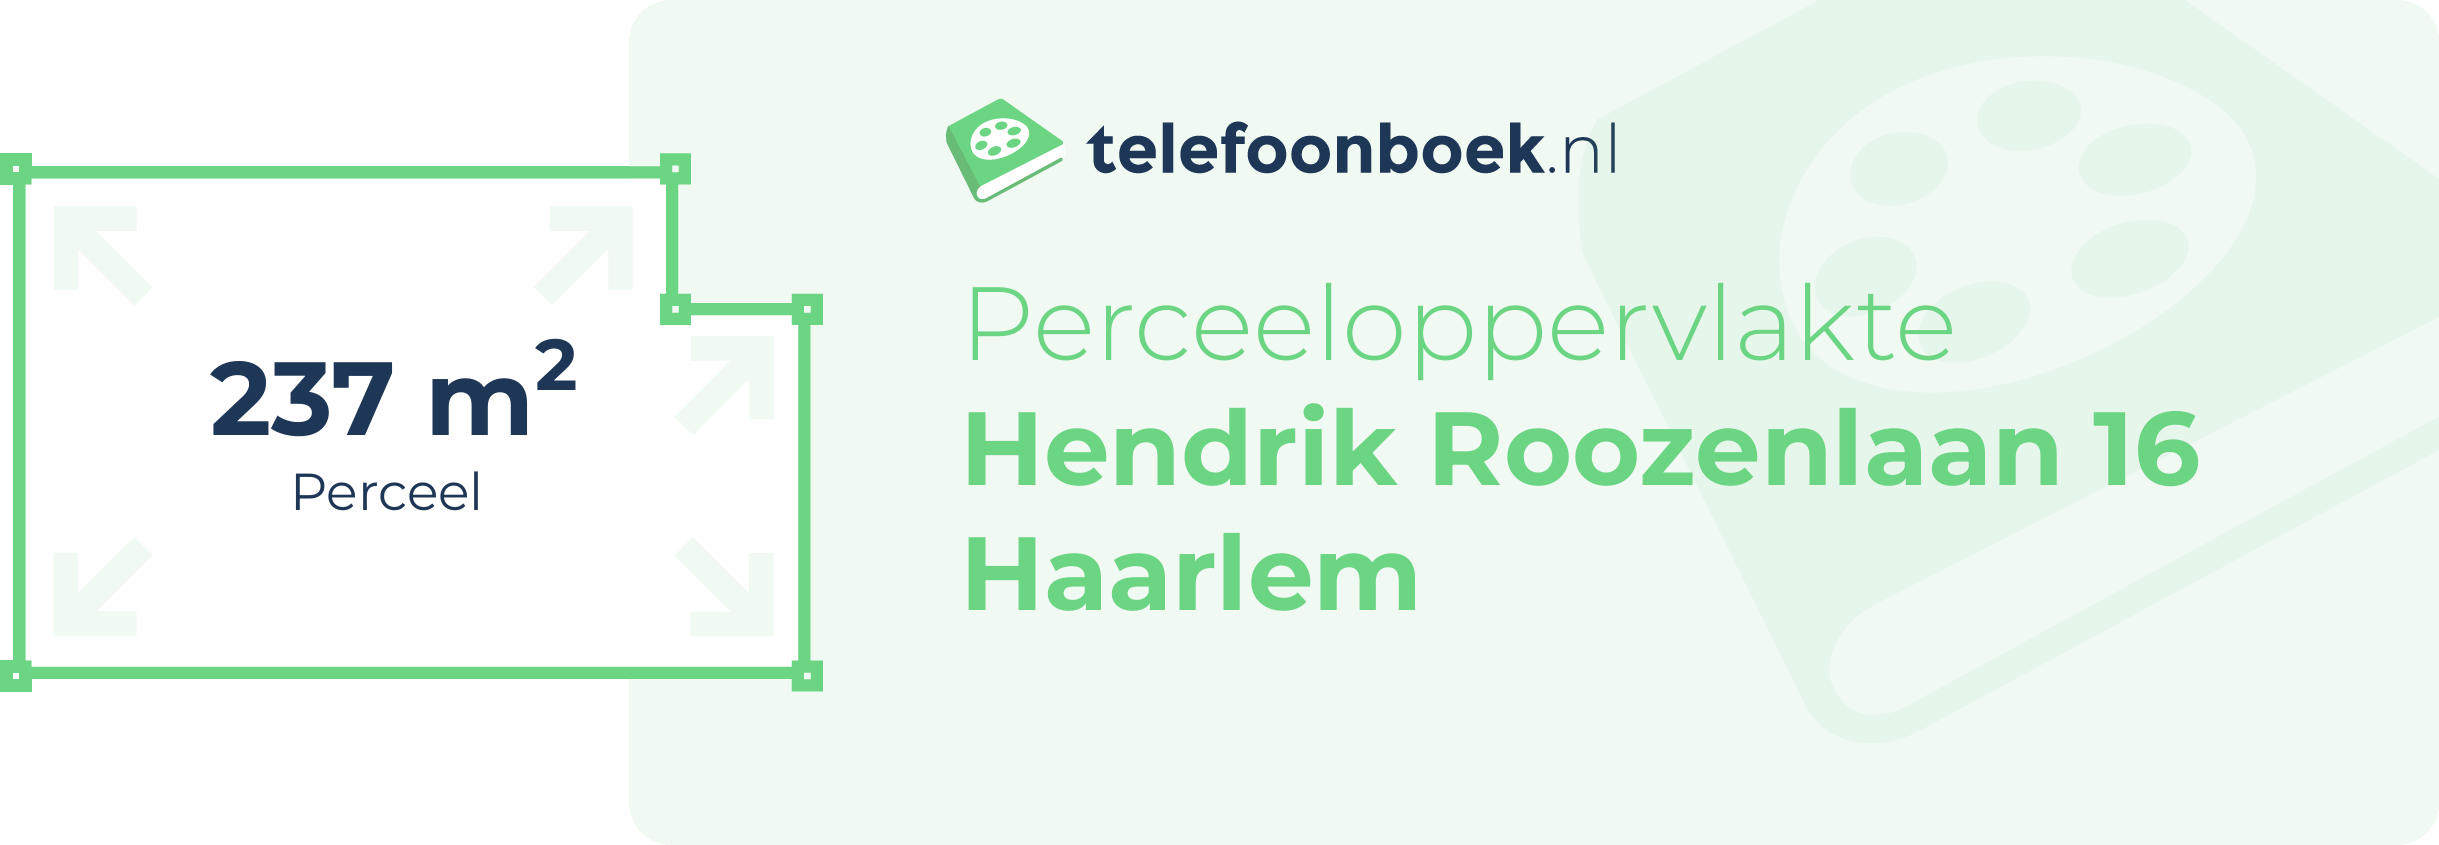 Perceeloppervlakte Hendrik Roozenlaan 16 Haarlem